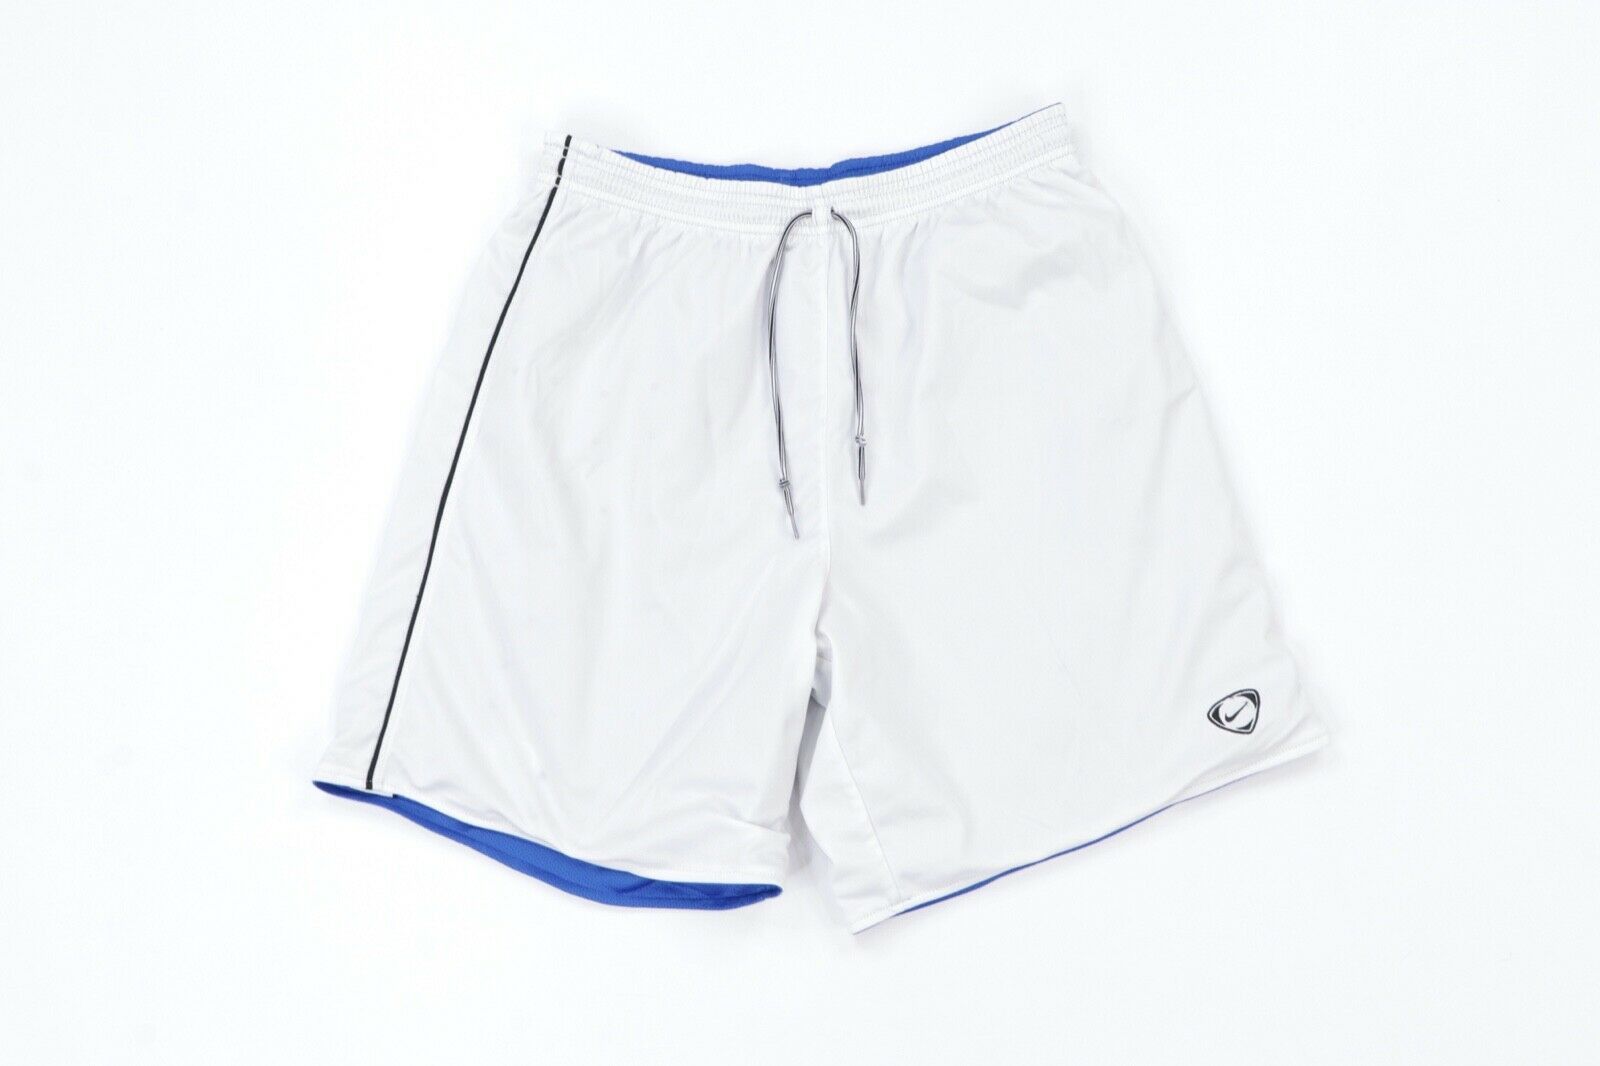 Nike Vintage Nike Total 90 Reversible Soccer Shorts Blue White M Size US 30 / EU 46 - 2 Preview